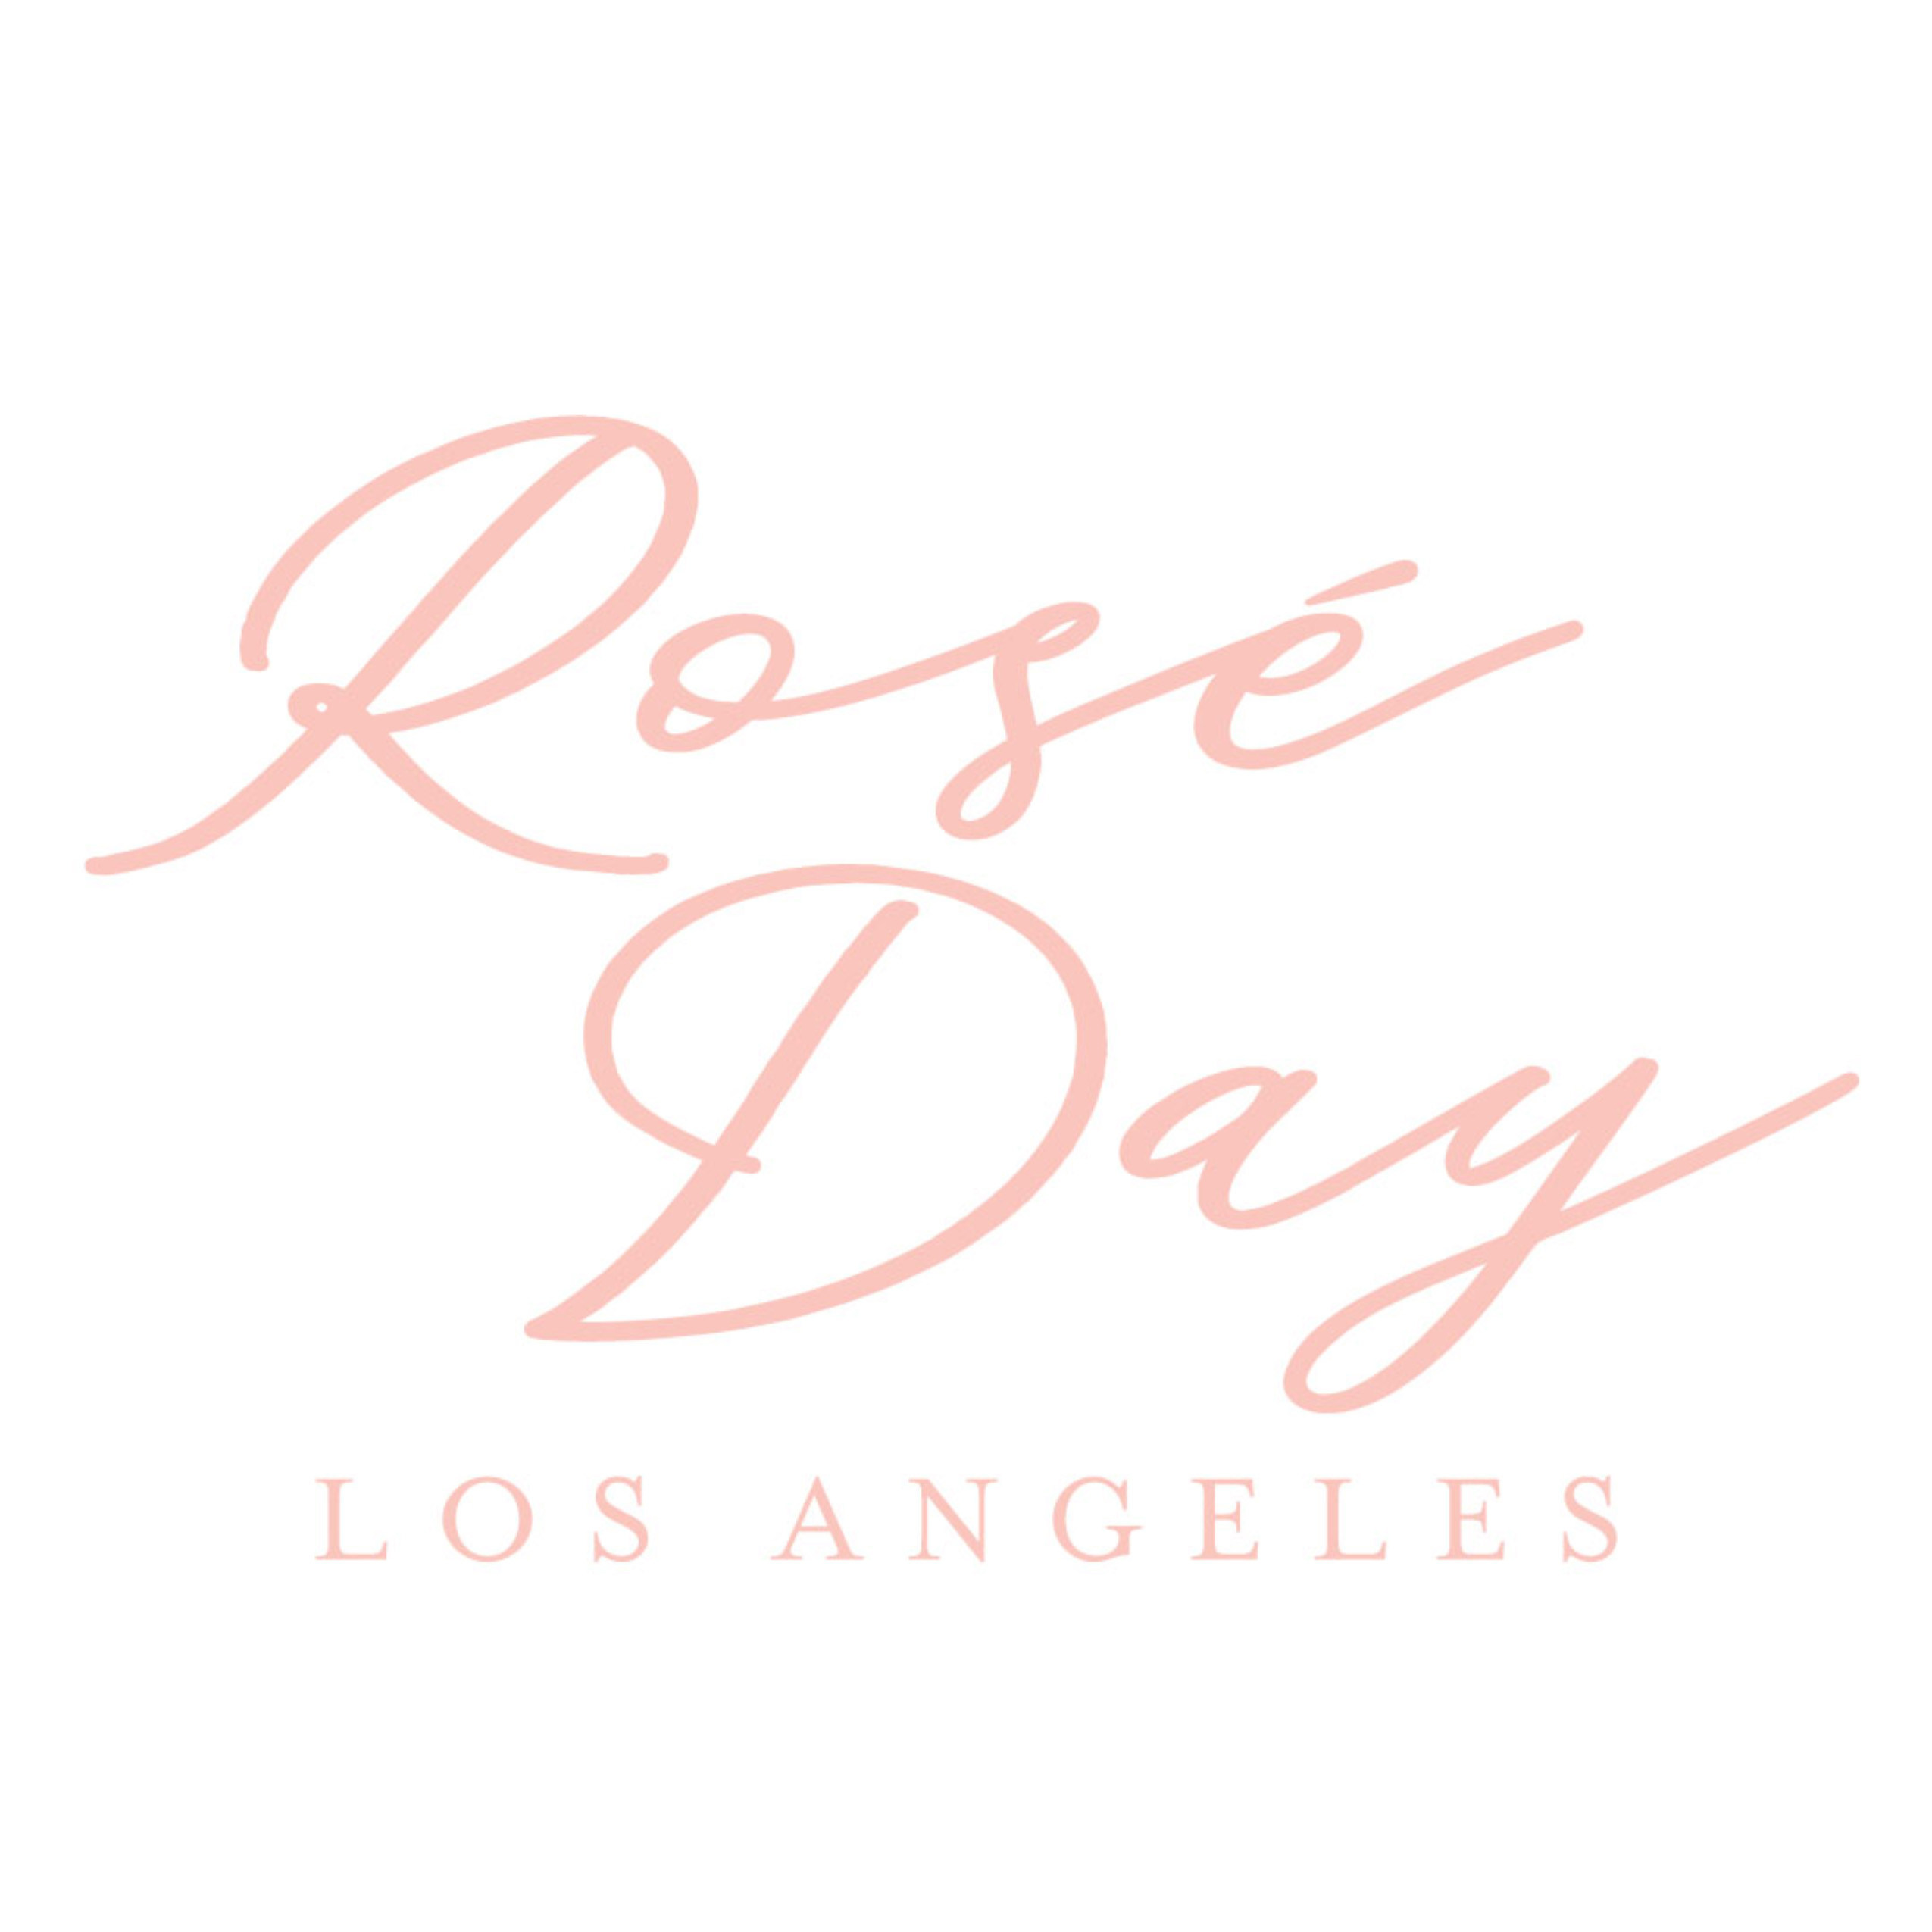 "Rosé Day LA" Launches in Los Angeles